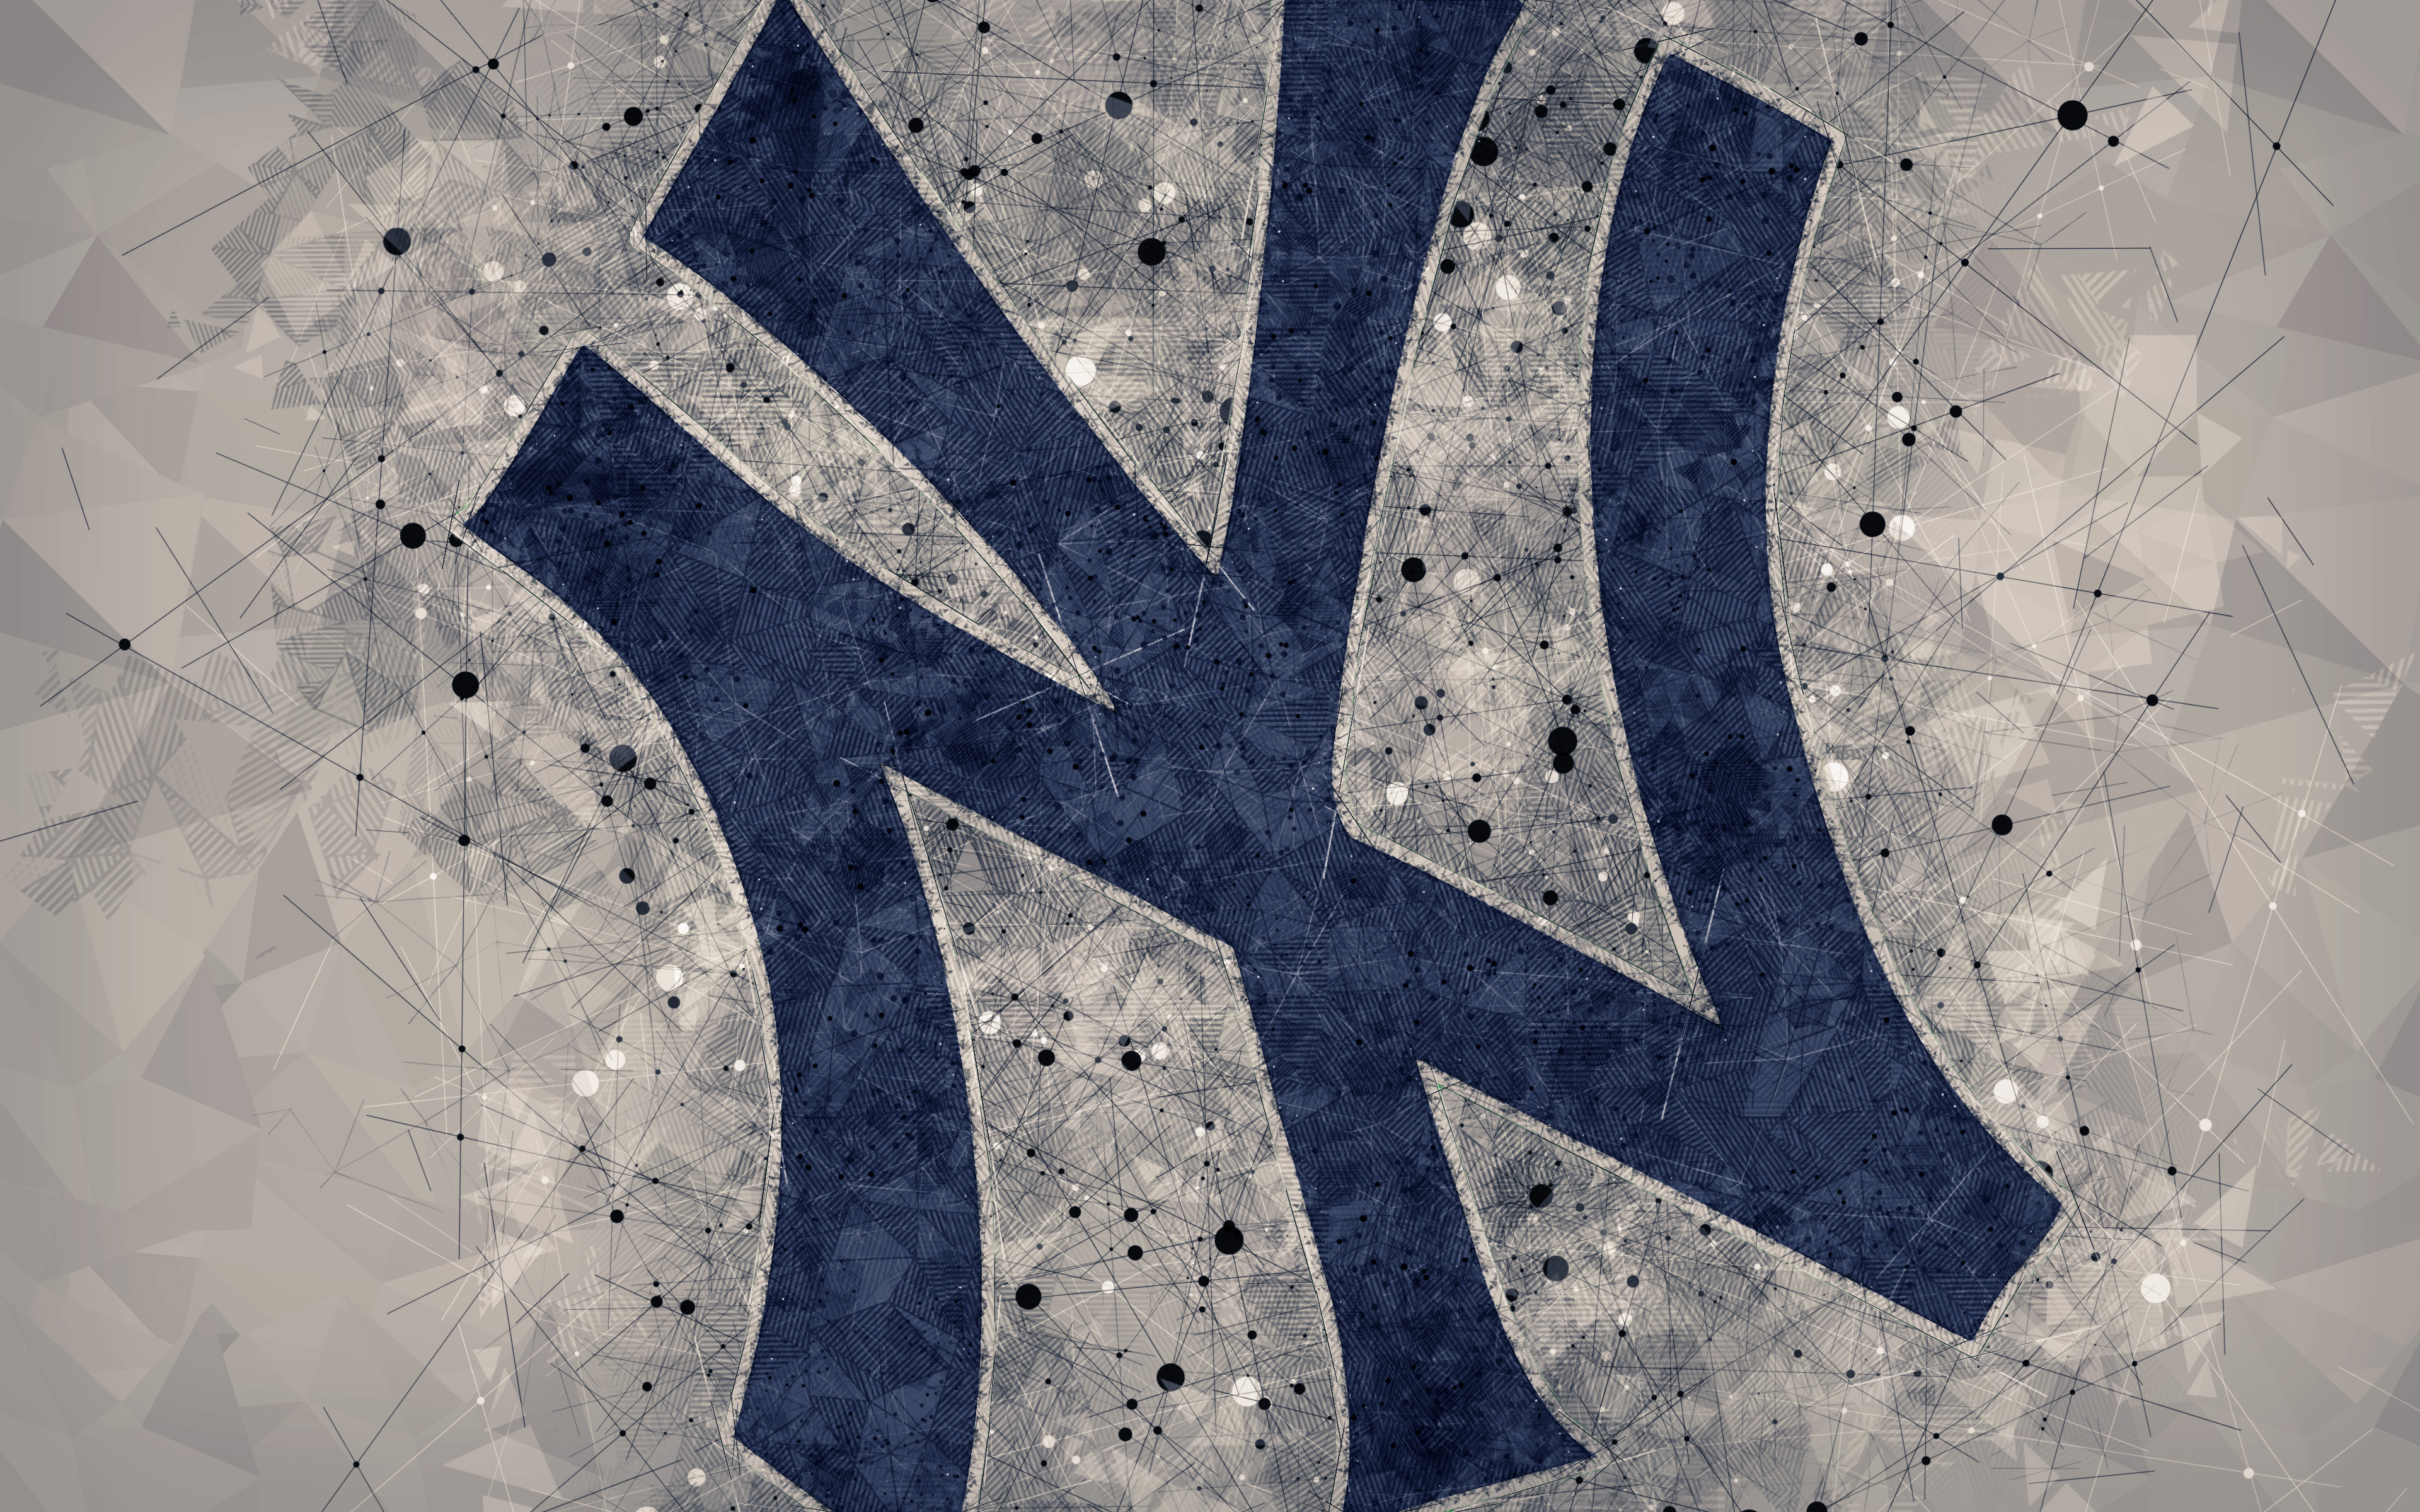 Sports New York Yankees HD Wallpaper | Background Image